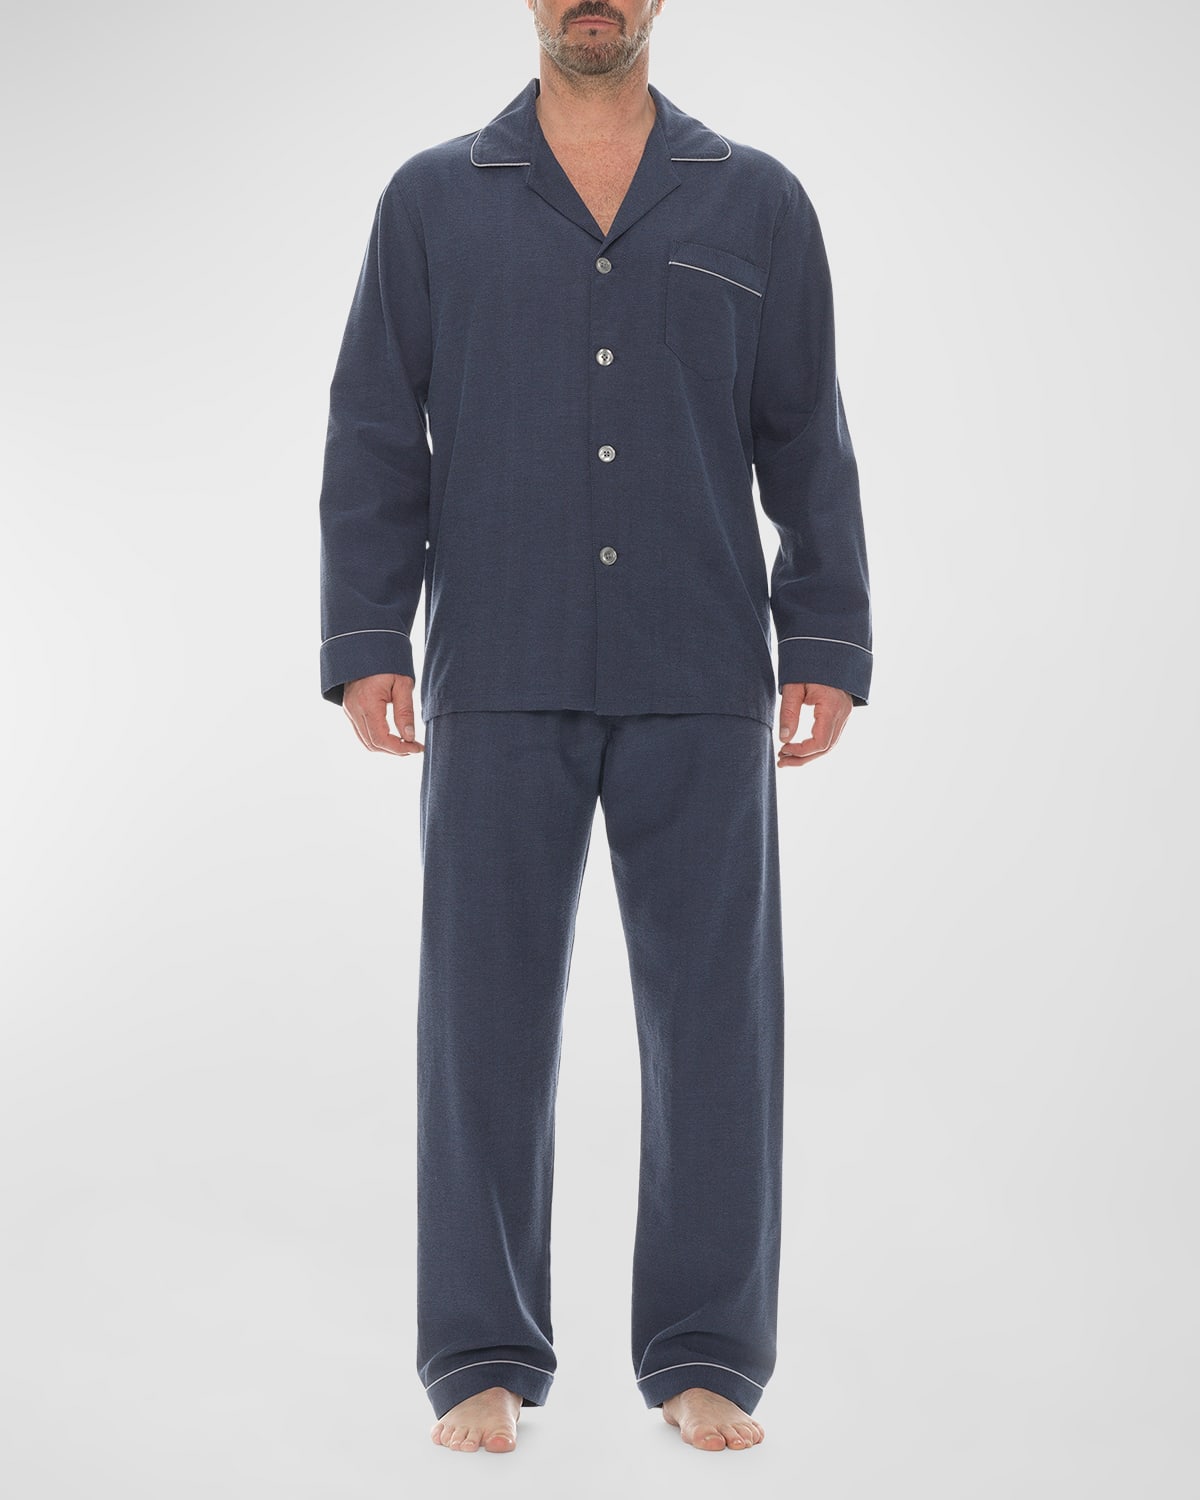 Majestic International Men's Citified Flannel Pajama Set